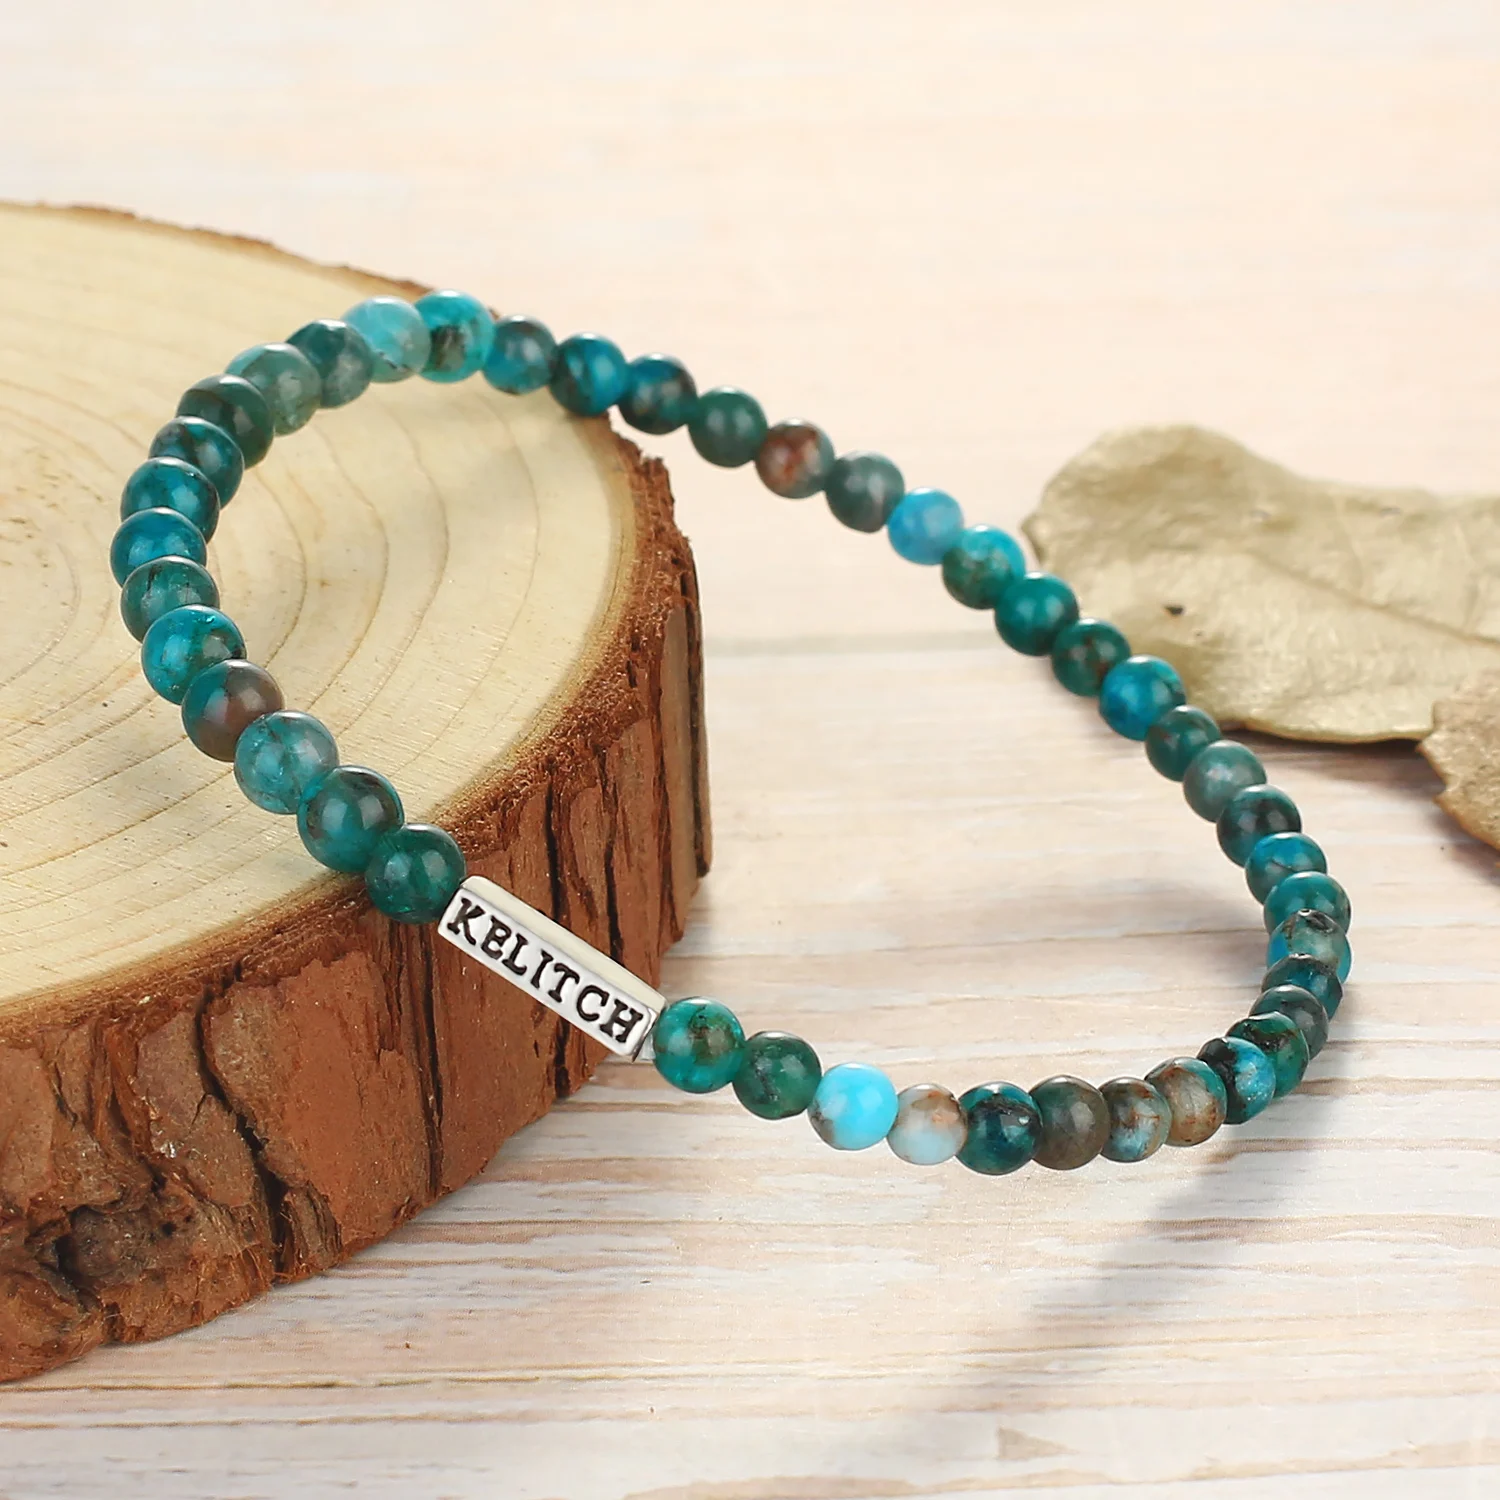 

KELITCH New Women Bracelets Turquoise Beads Charm Strand Bangles Chain Handmade Jewelry Boho Friendship Bangle Gifts Wholesale